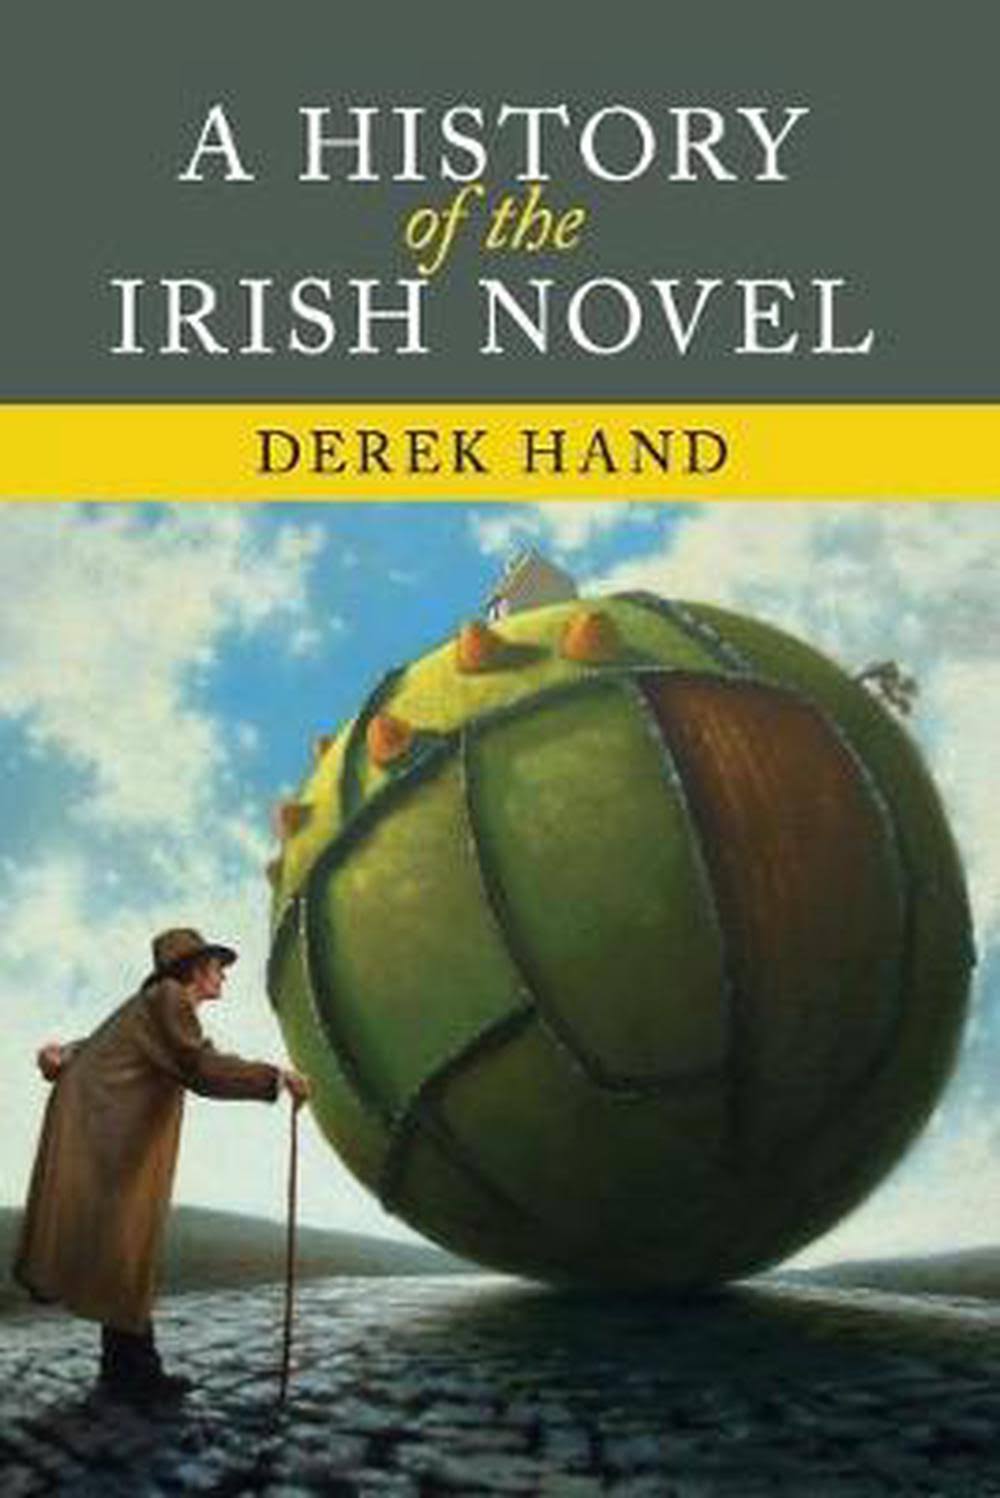 A History of the Irish Novel [Book]